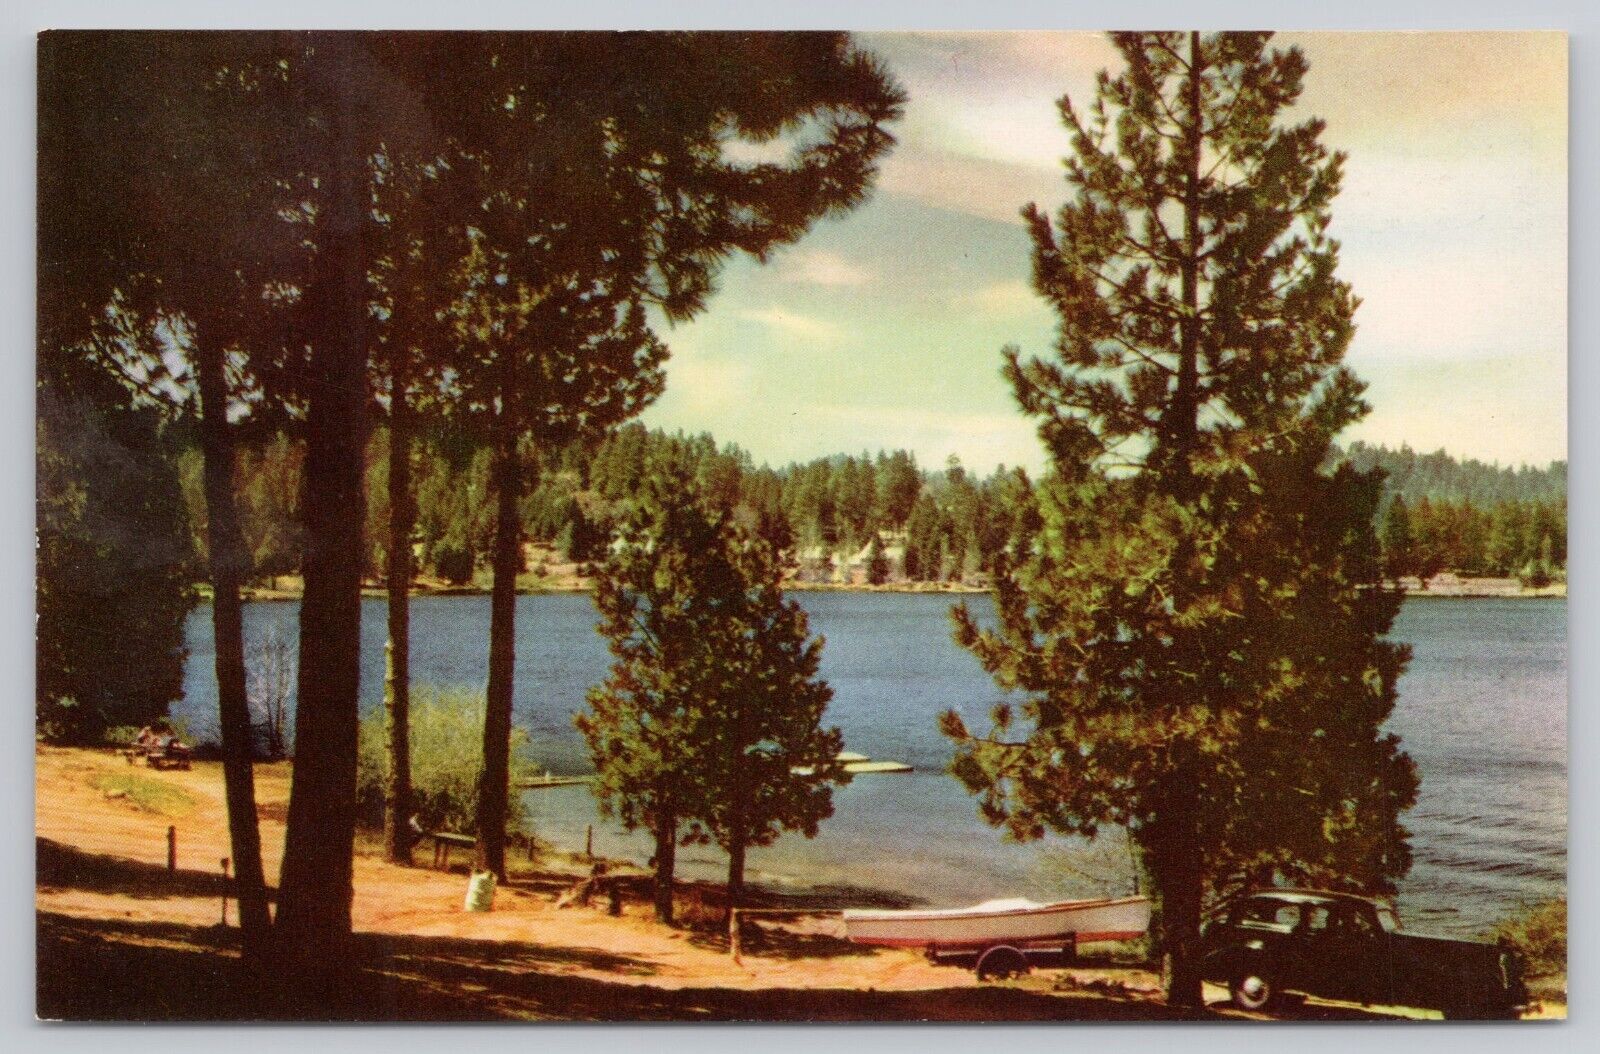 Lake Arrowhead California, Old Car Boat Scenic View, Vintage Postcard